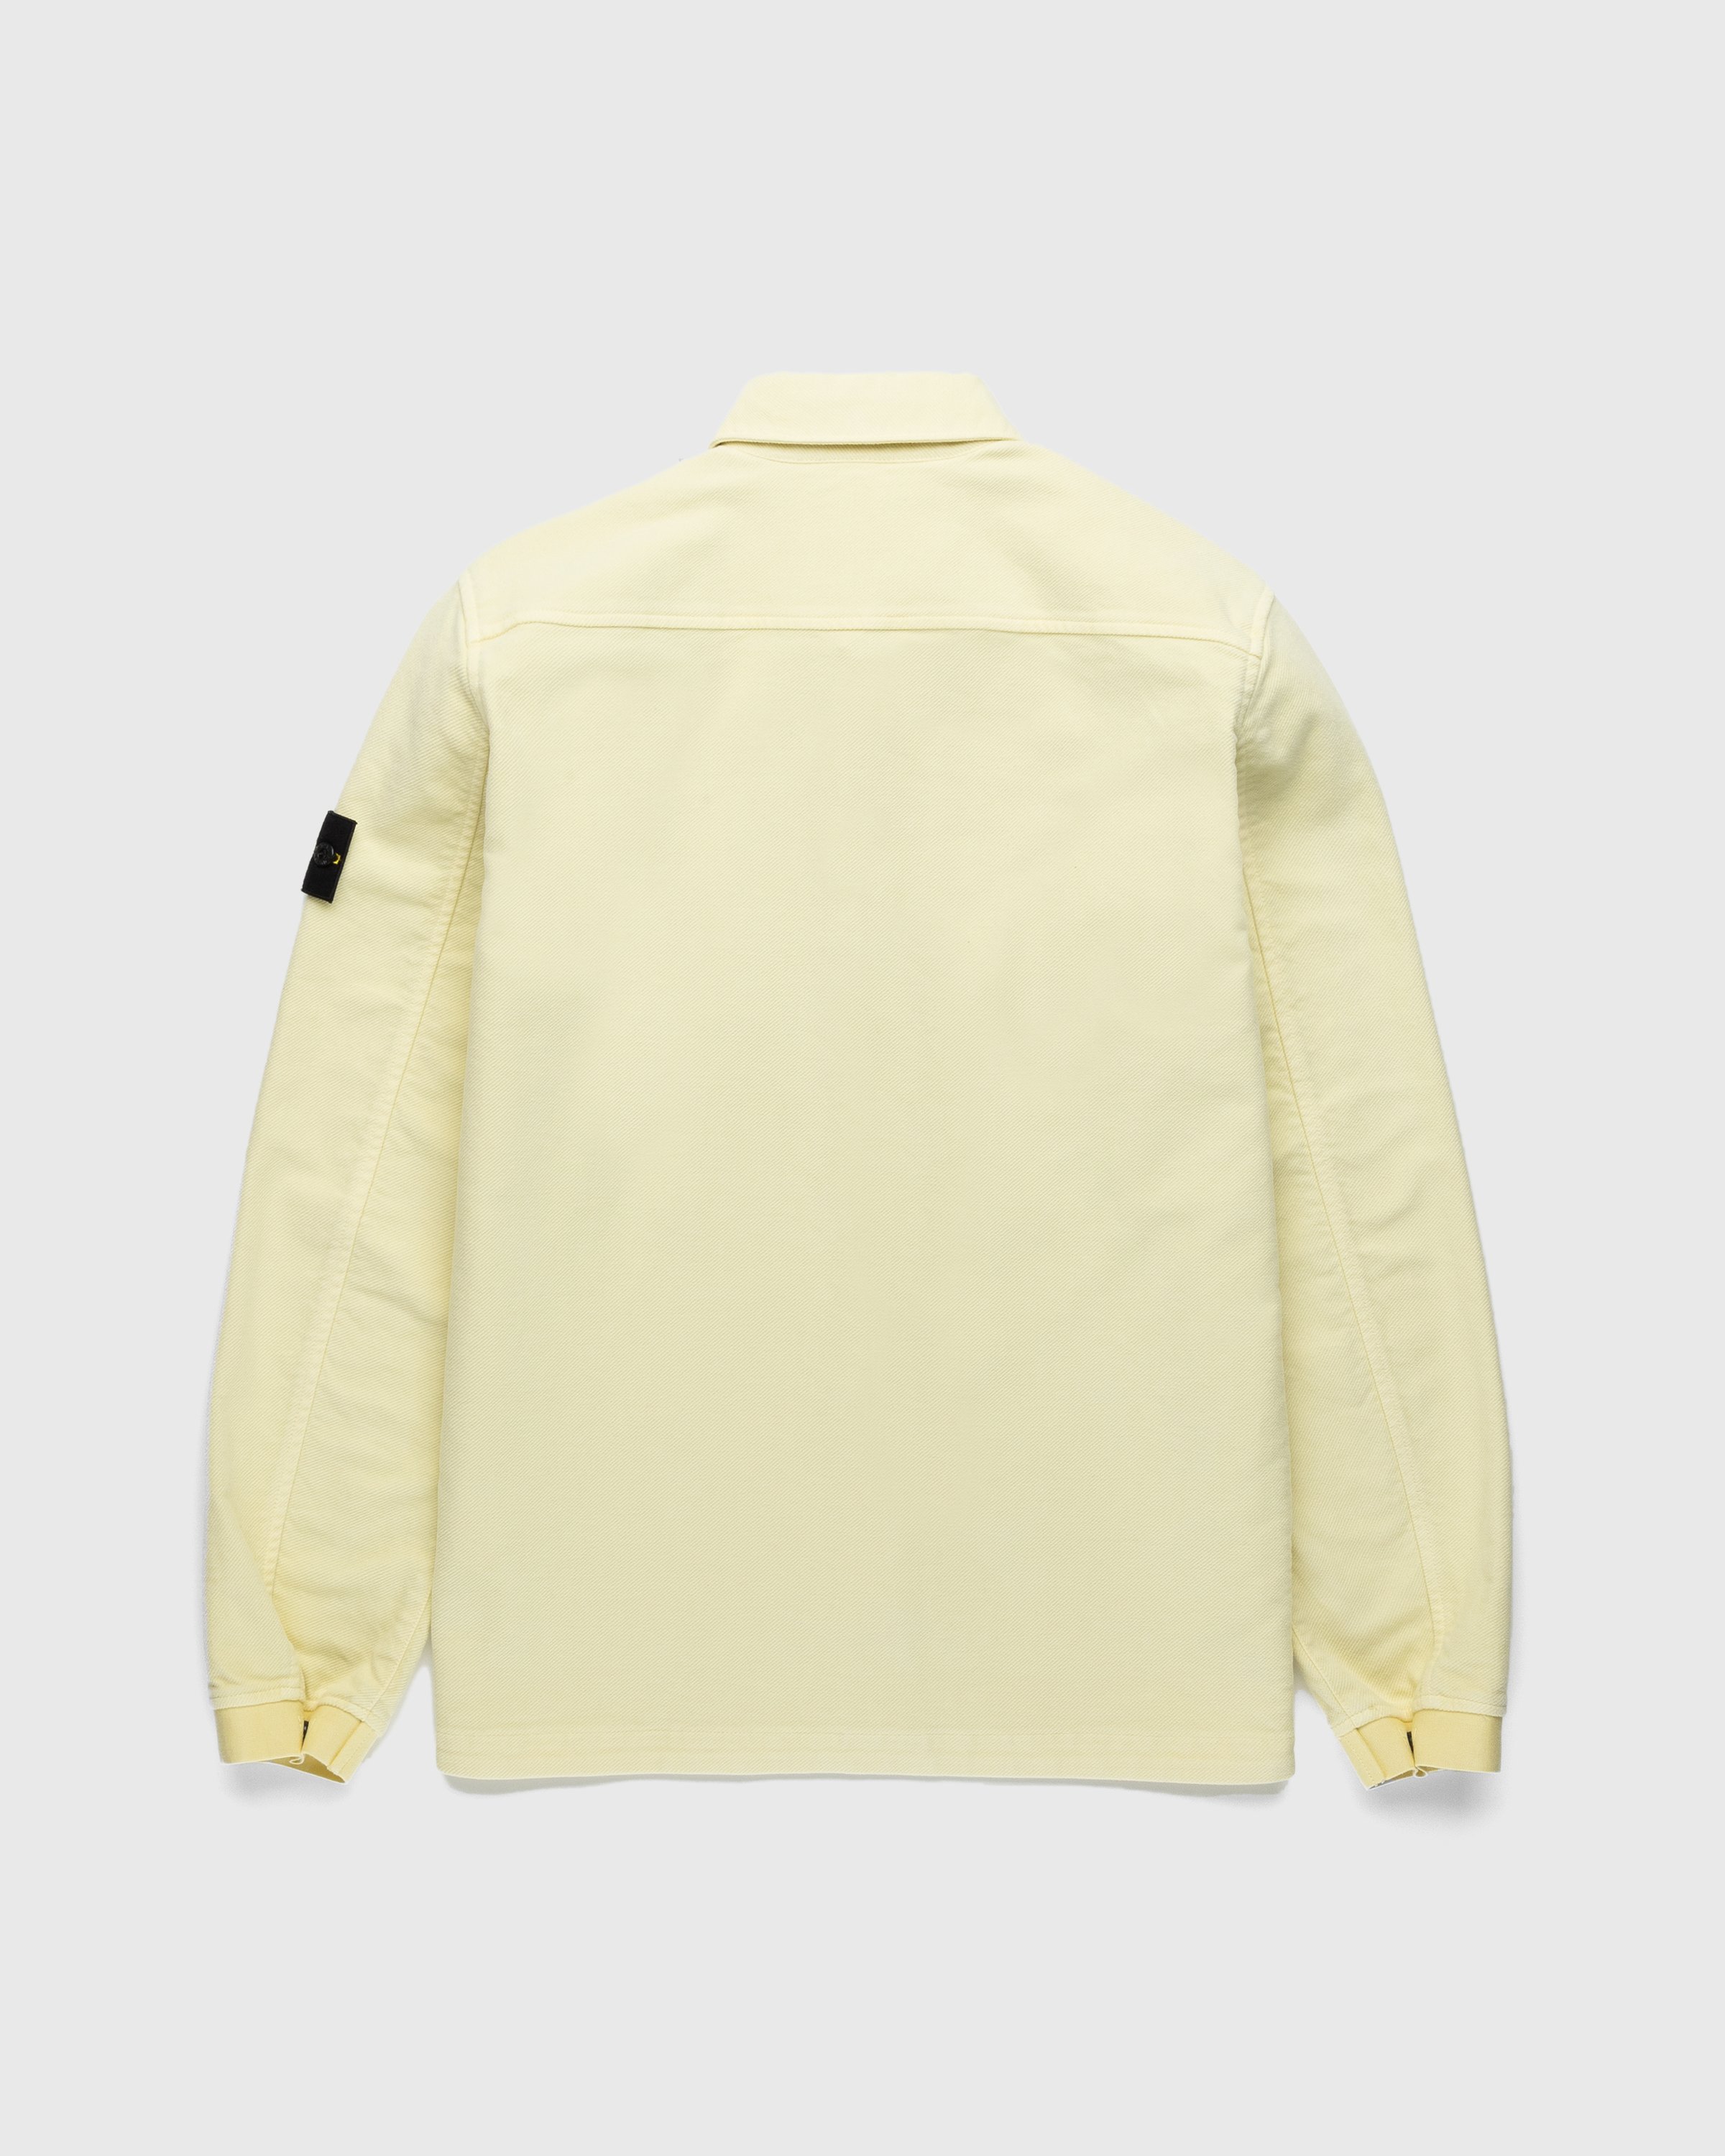 Stone Island - Garment-Dyed Cotton Overshirt Butter - Clothing - Beige - Image 2